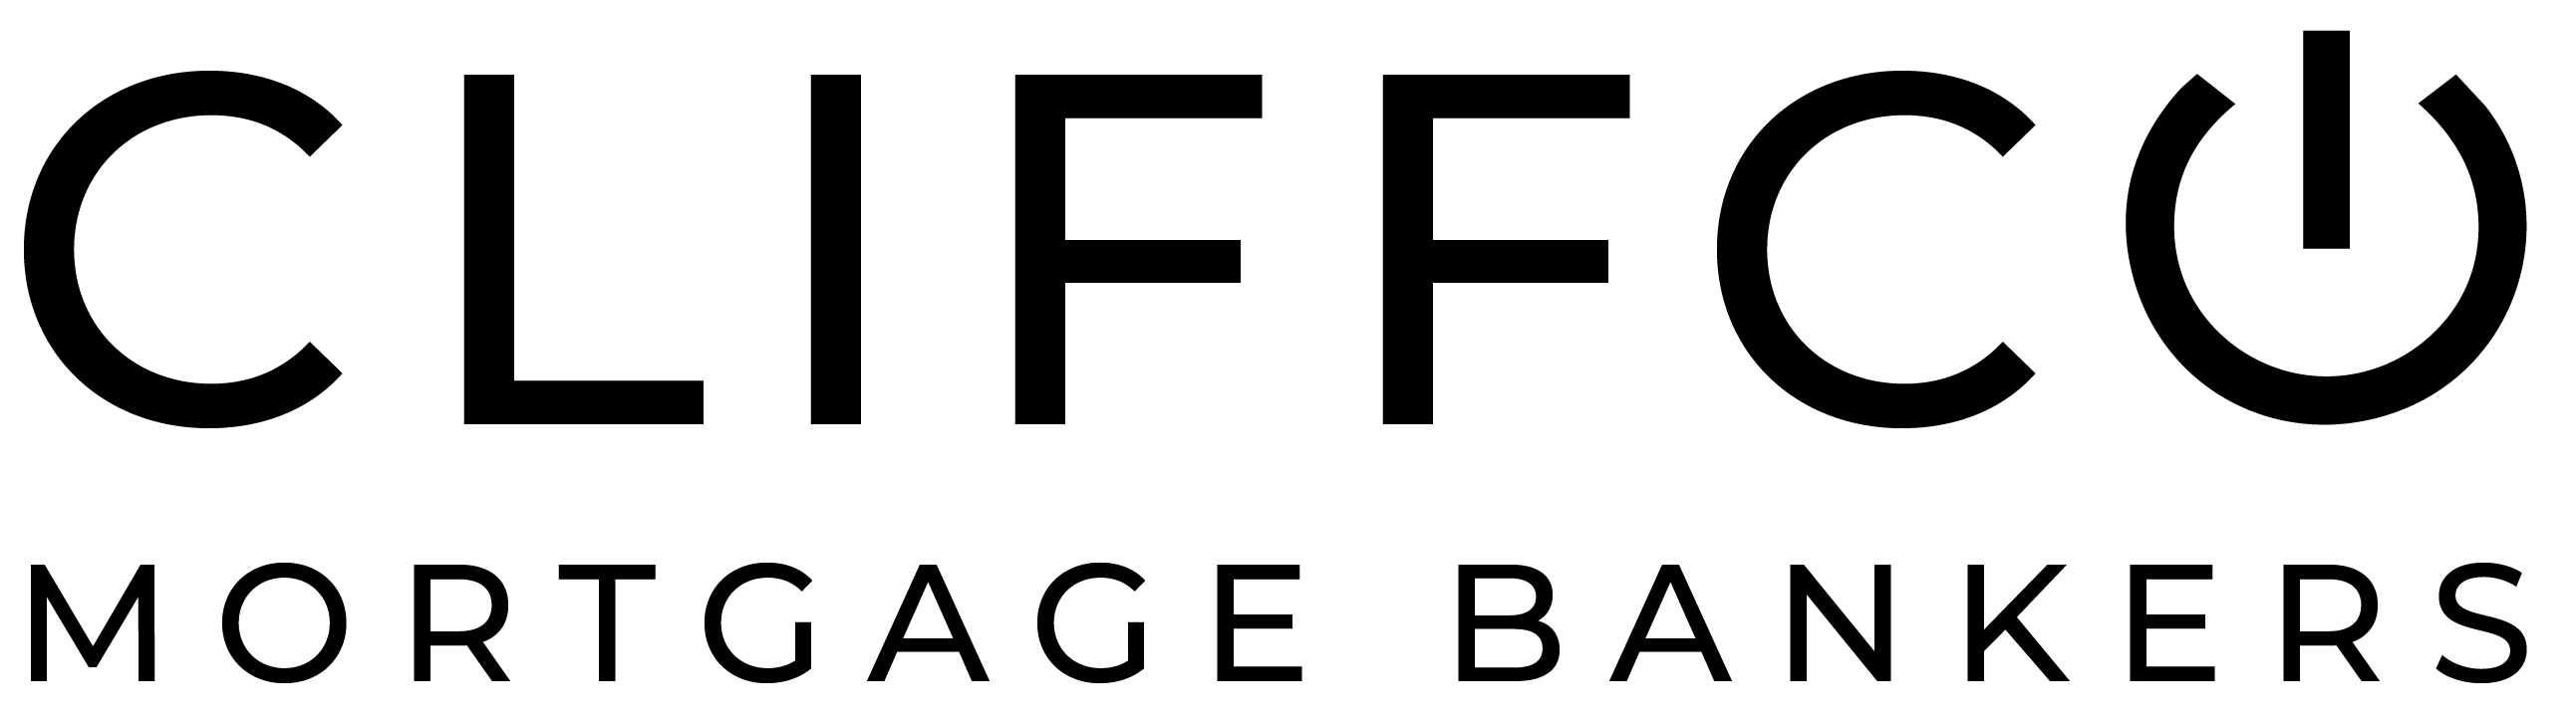 Marta Stingo Logo